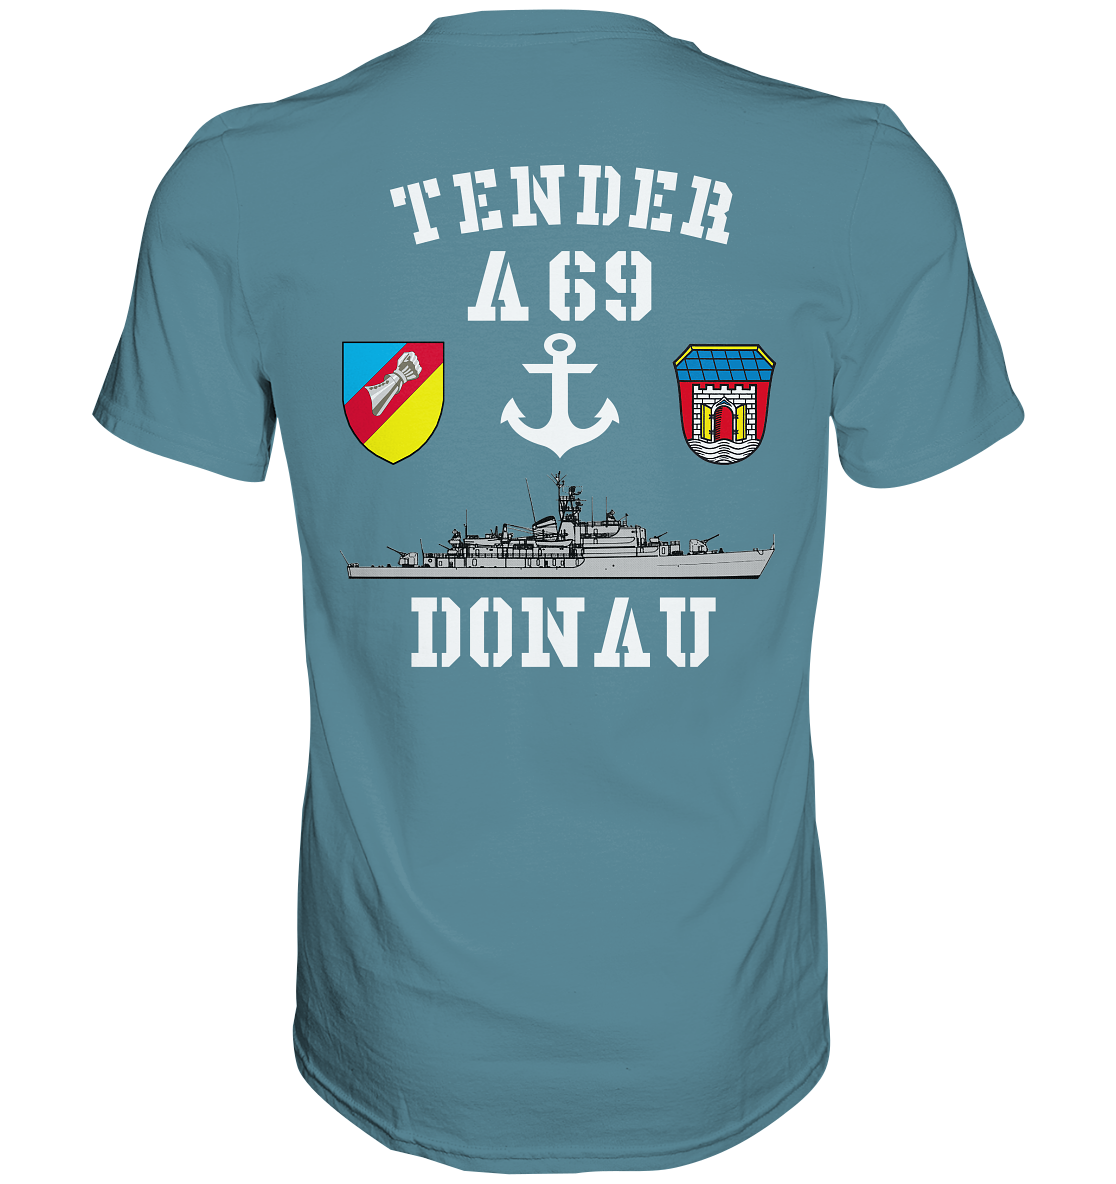 Tender A69 DONAU Operation SÜDFLANKE - Premium Shirt